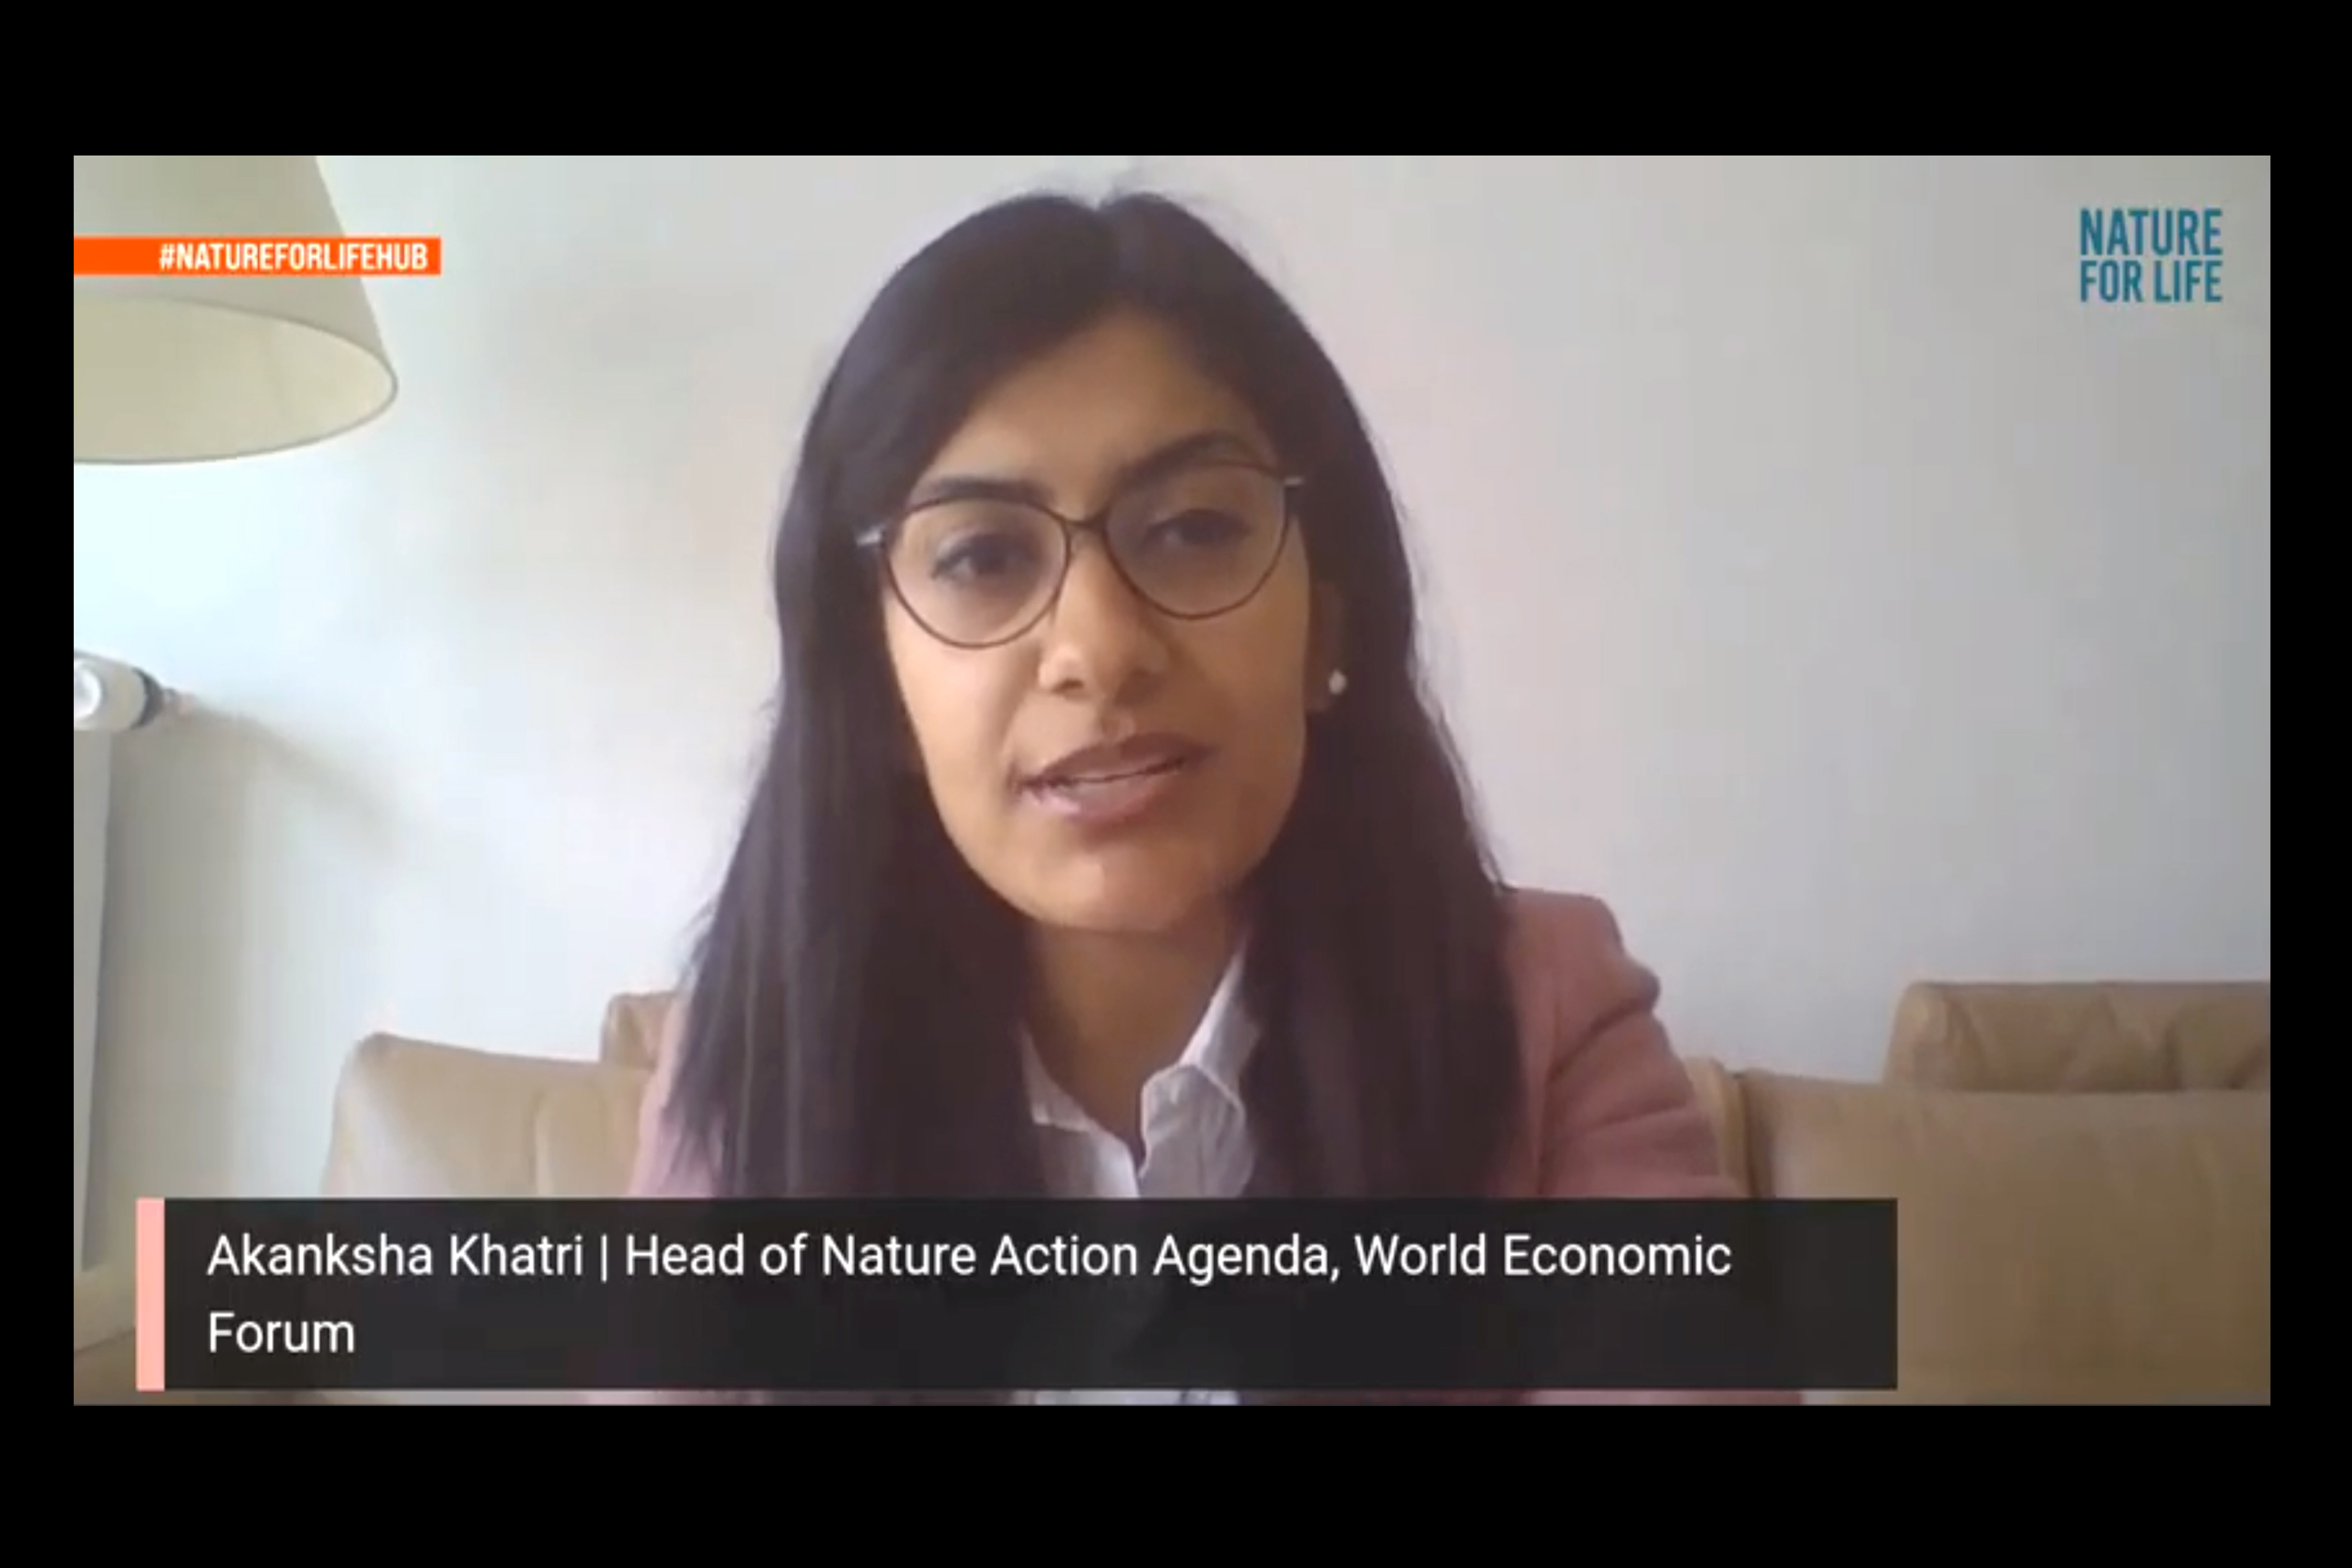 Akanksha Khatri, Head of the Nature Action Agenda for the World Economic Forum’s Platform for Global Public Goods